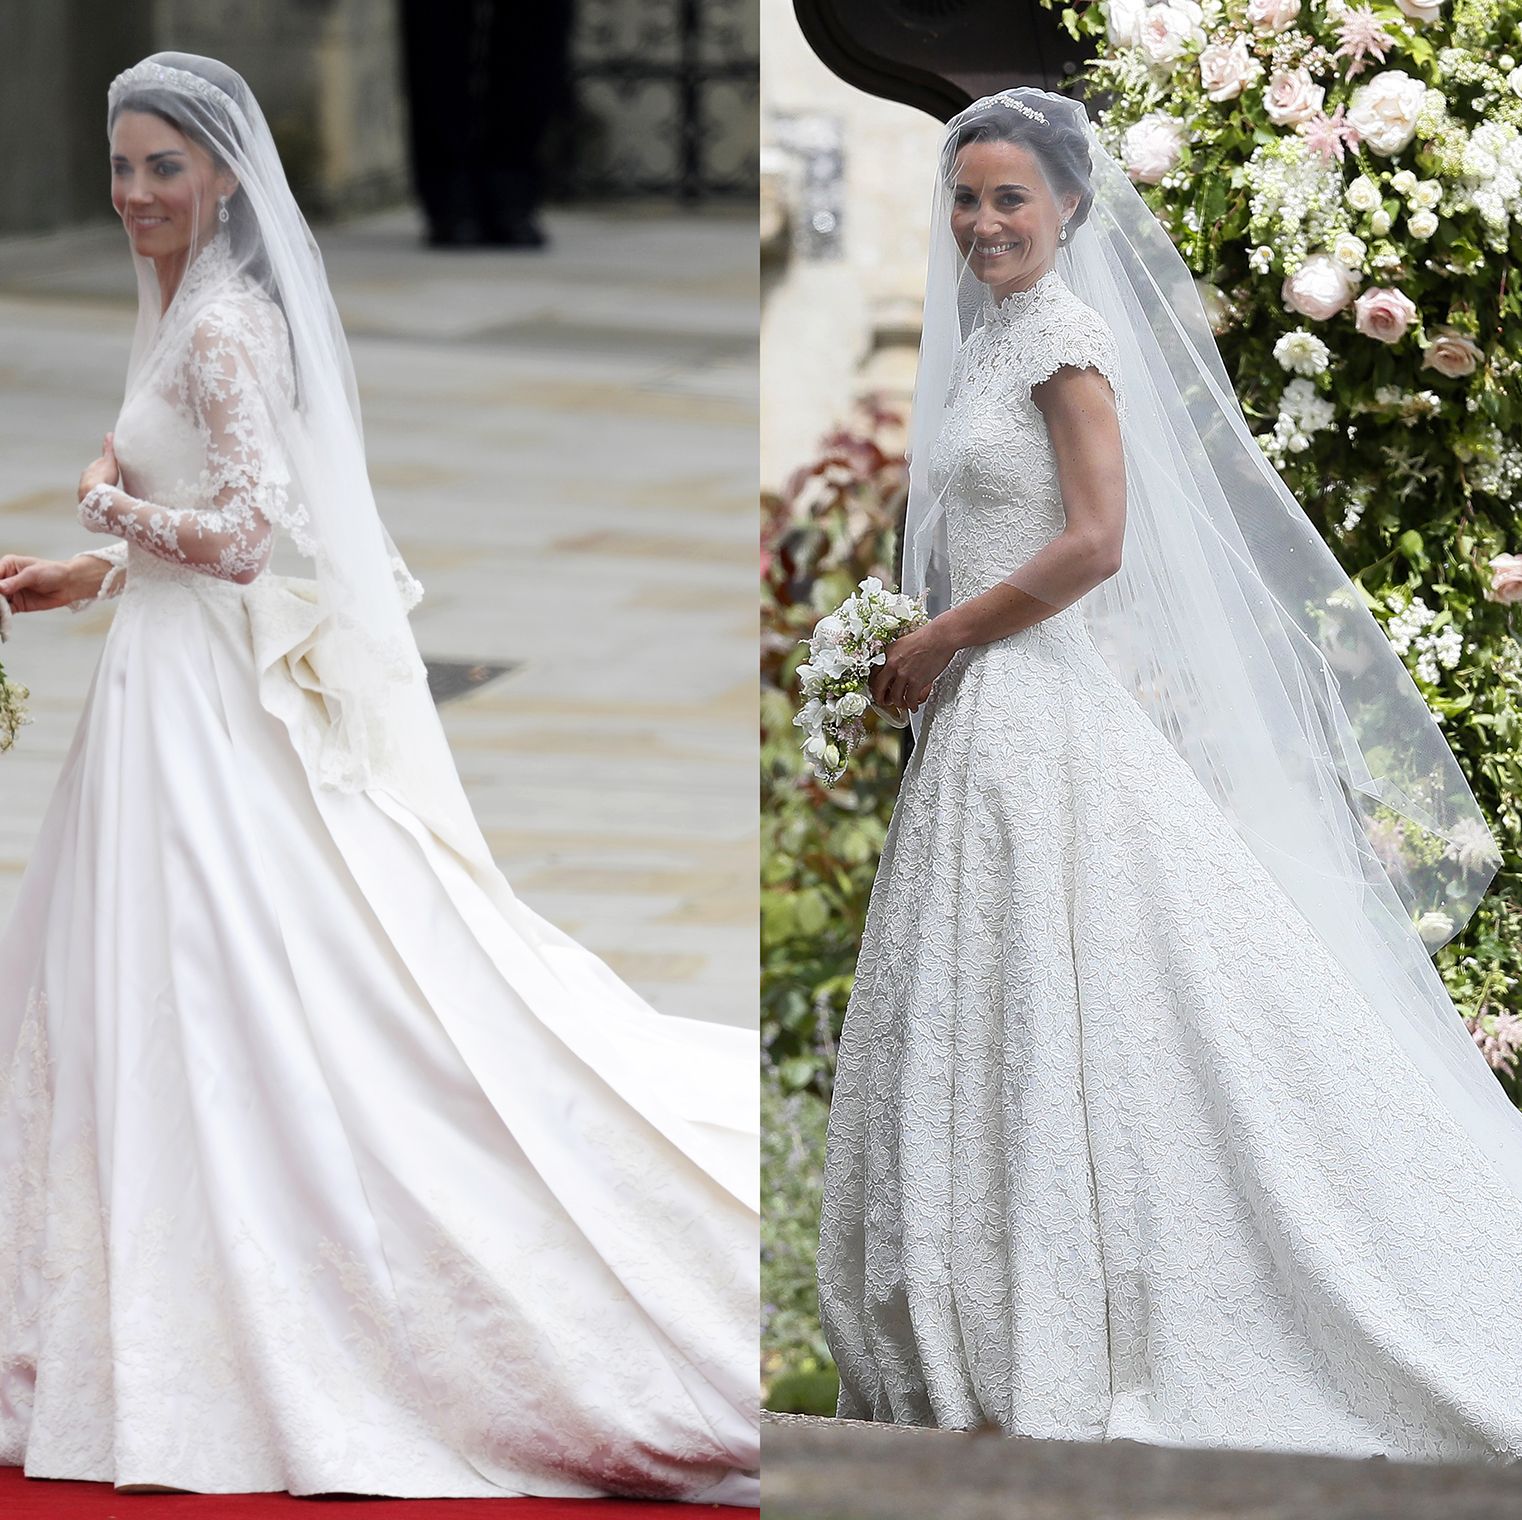 Photos From Pippa Middleton's Wedding That Are the Same as Kate Middleton's Wedding